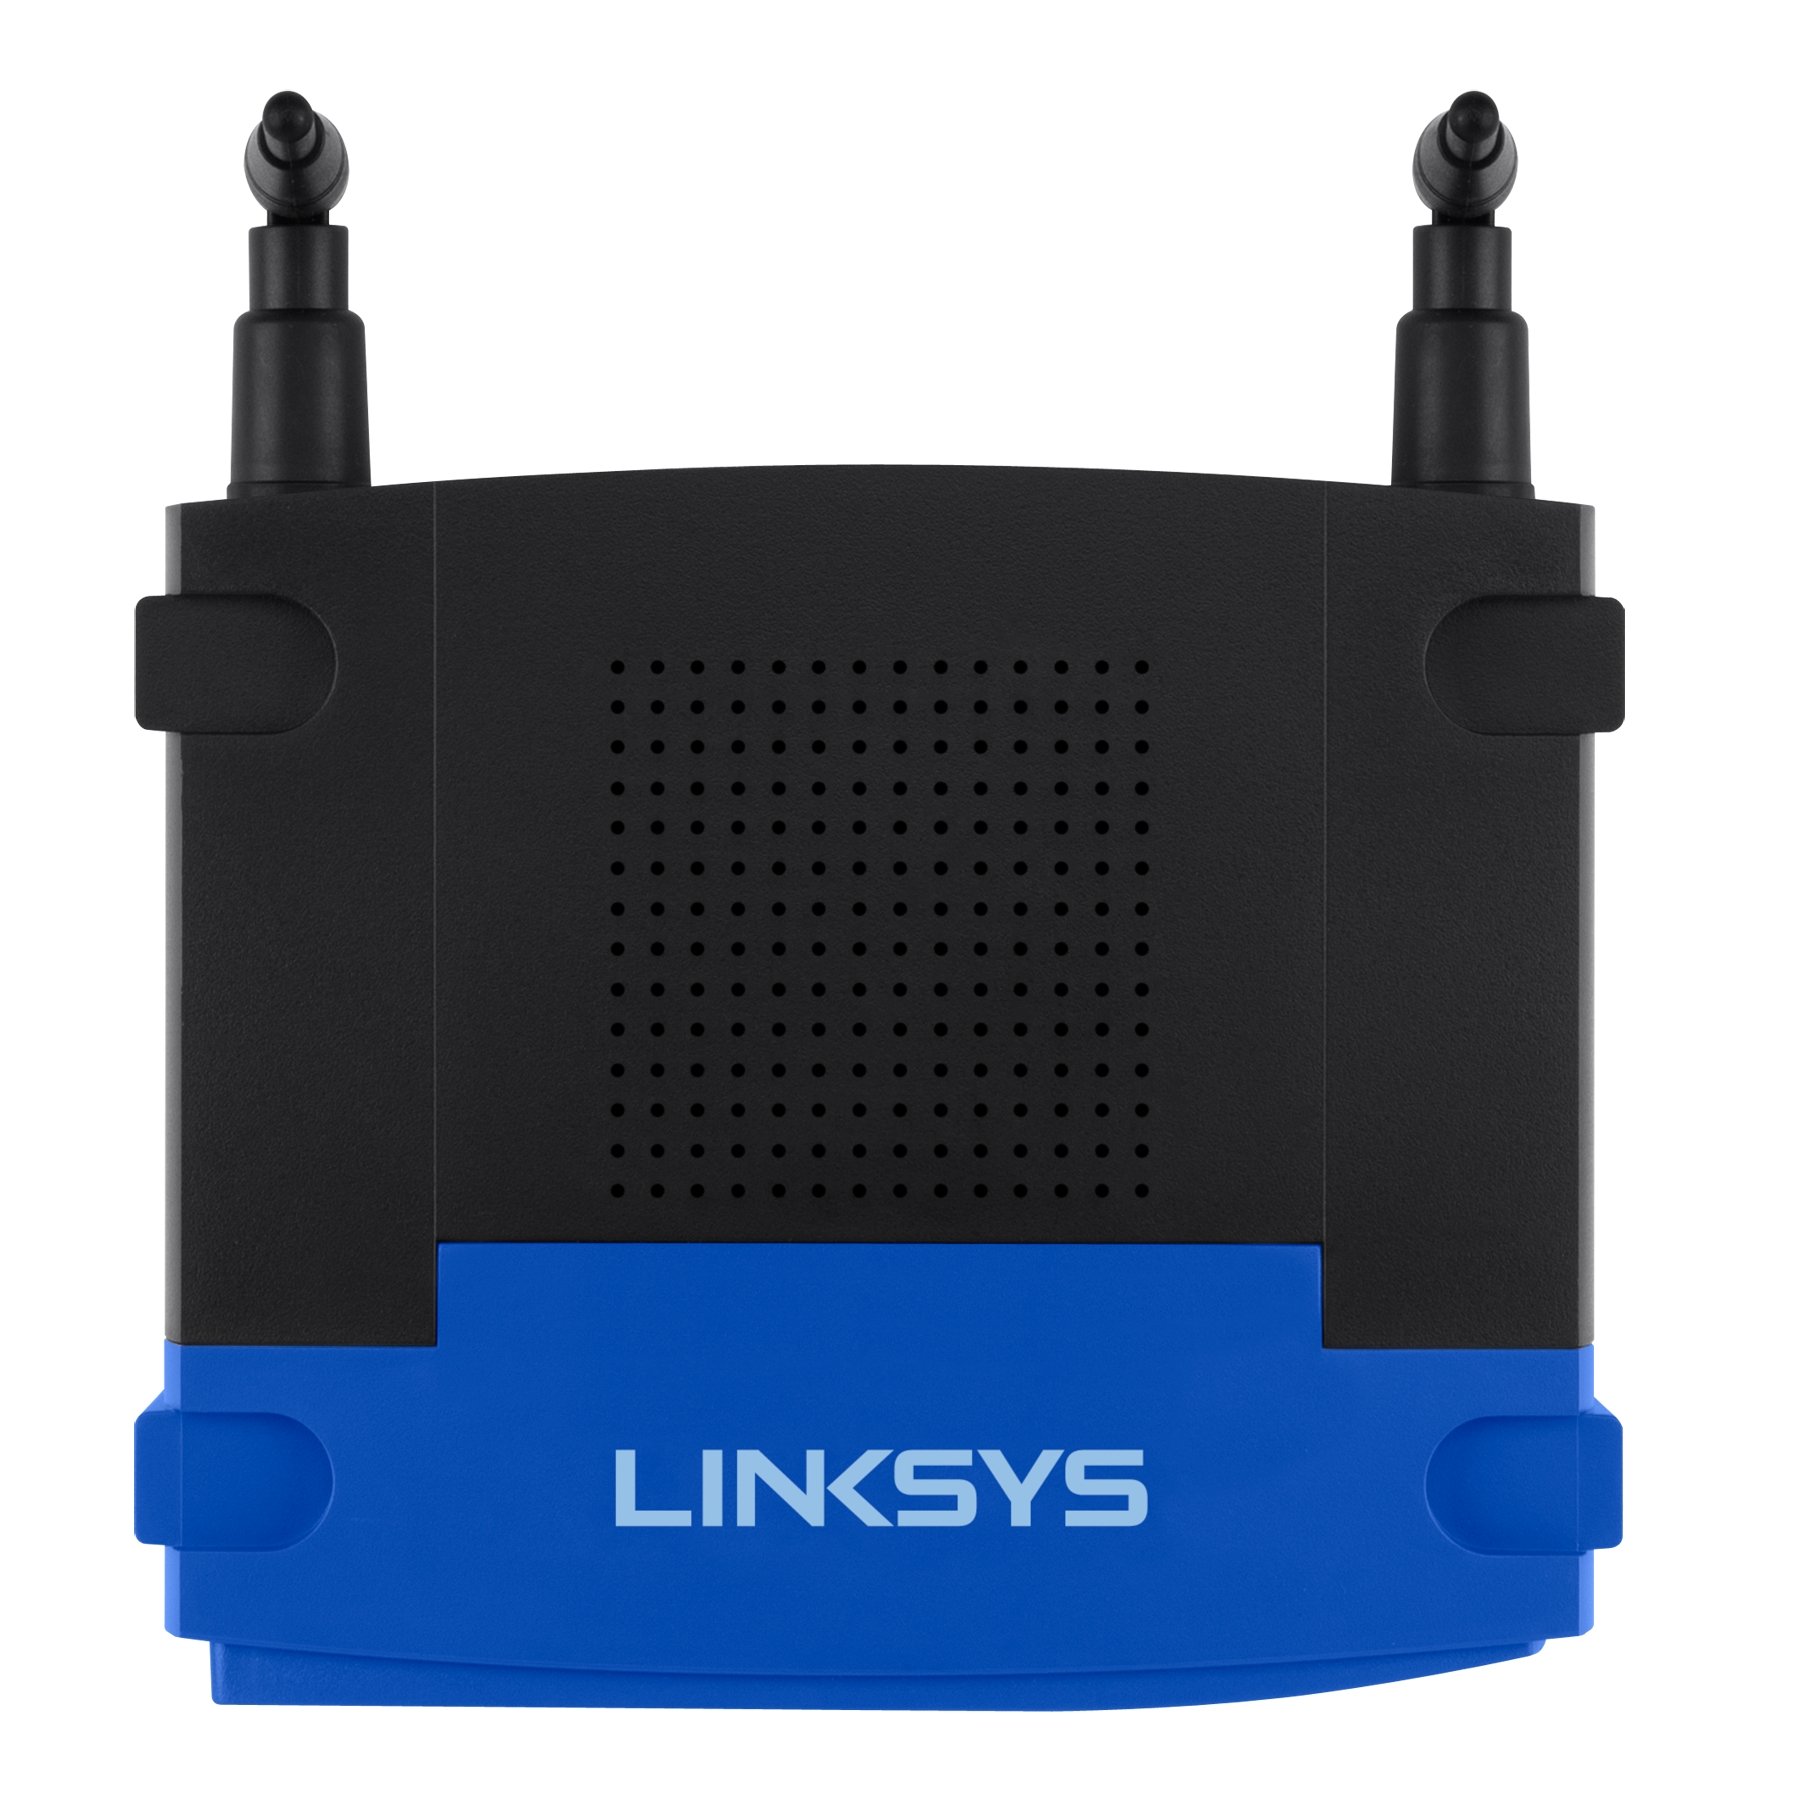 Linksys wrt54gl wireless-g wifi router